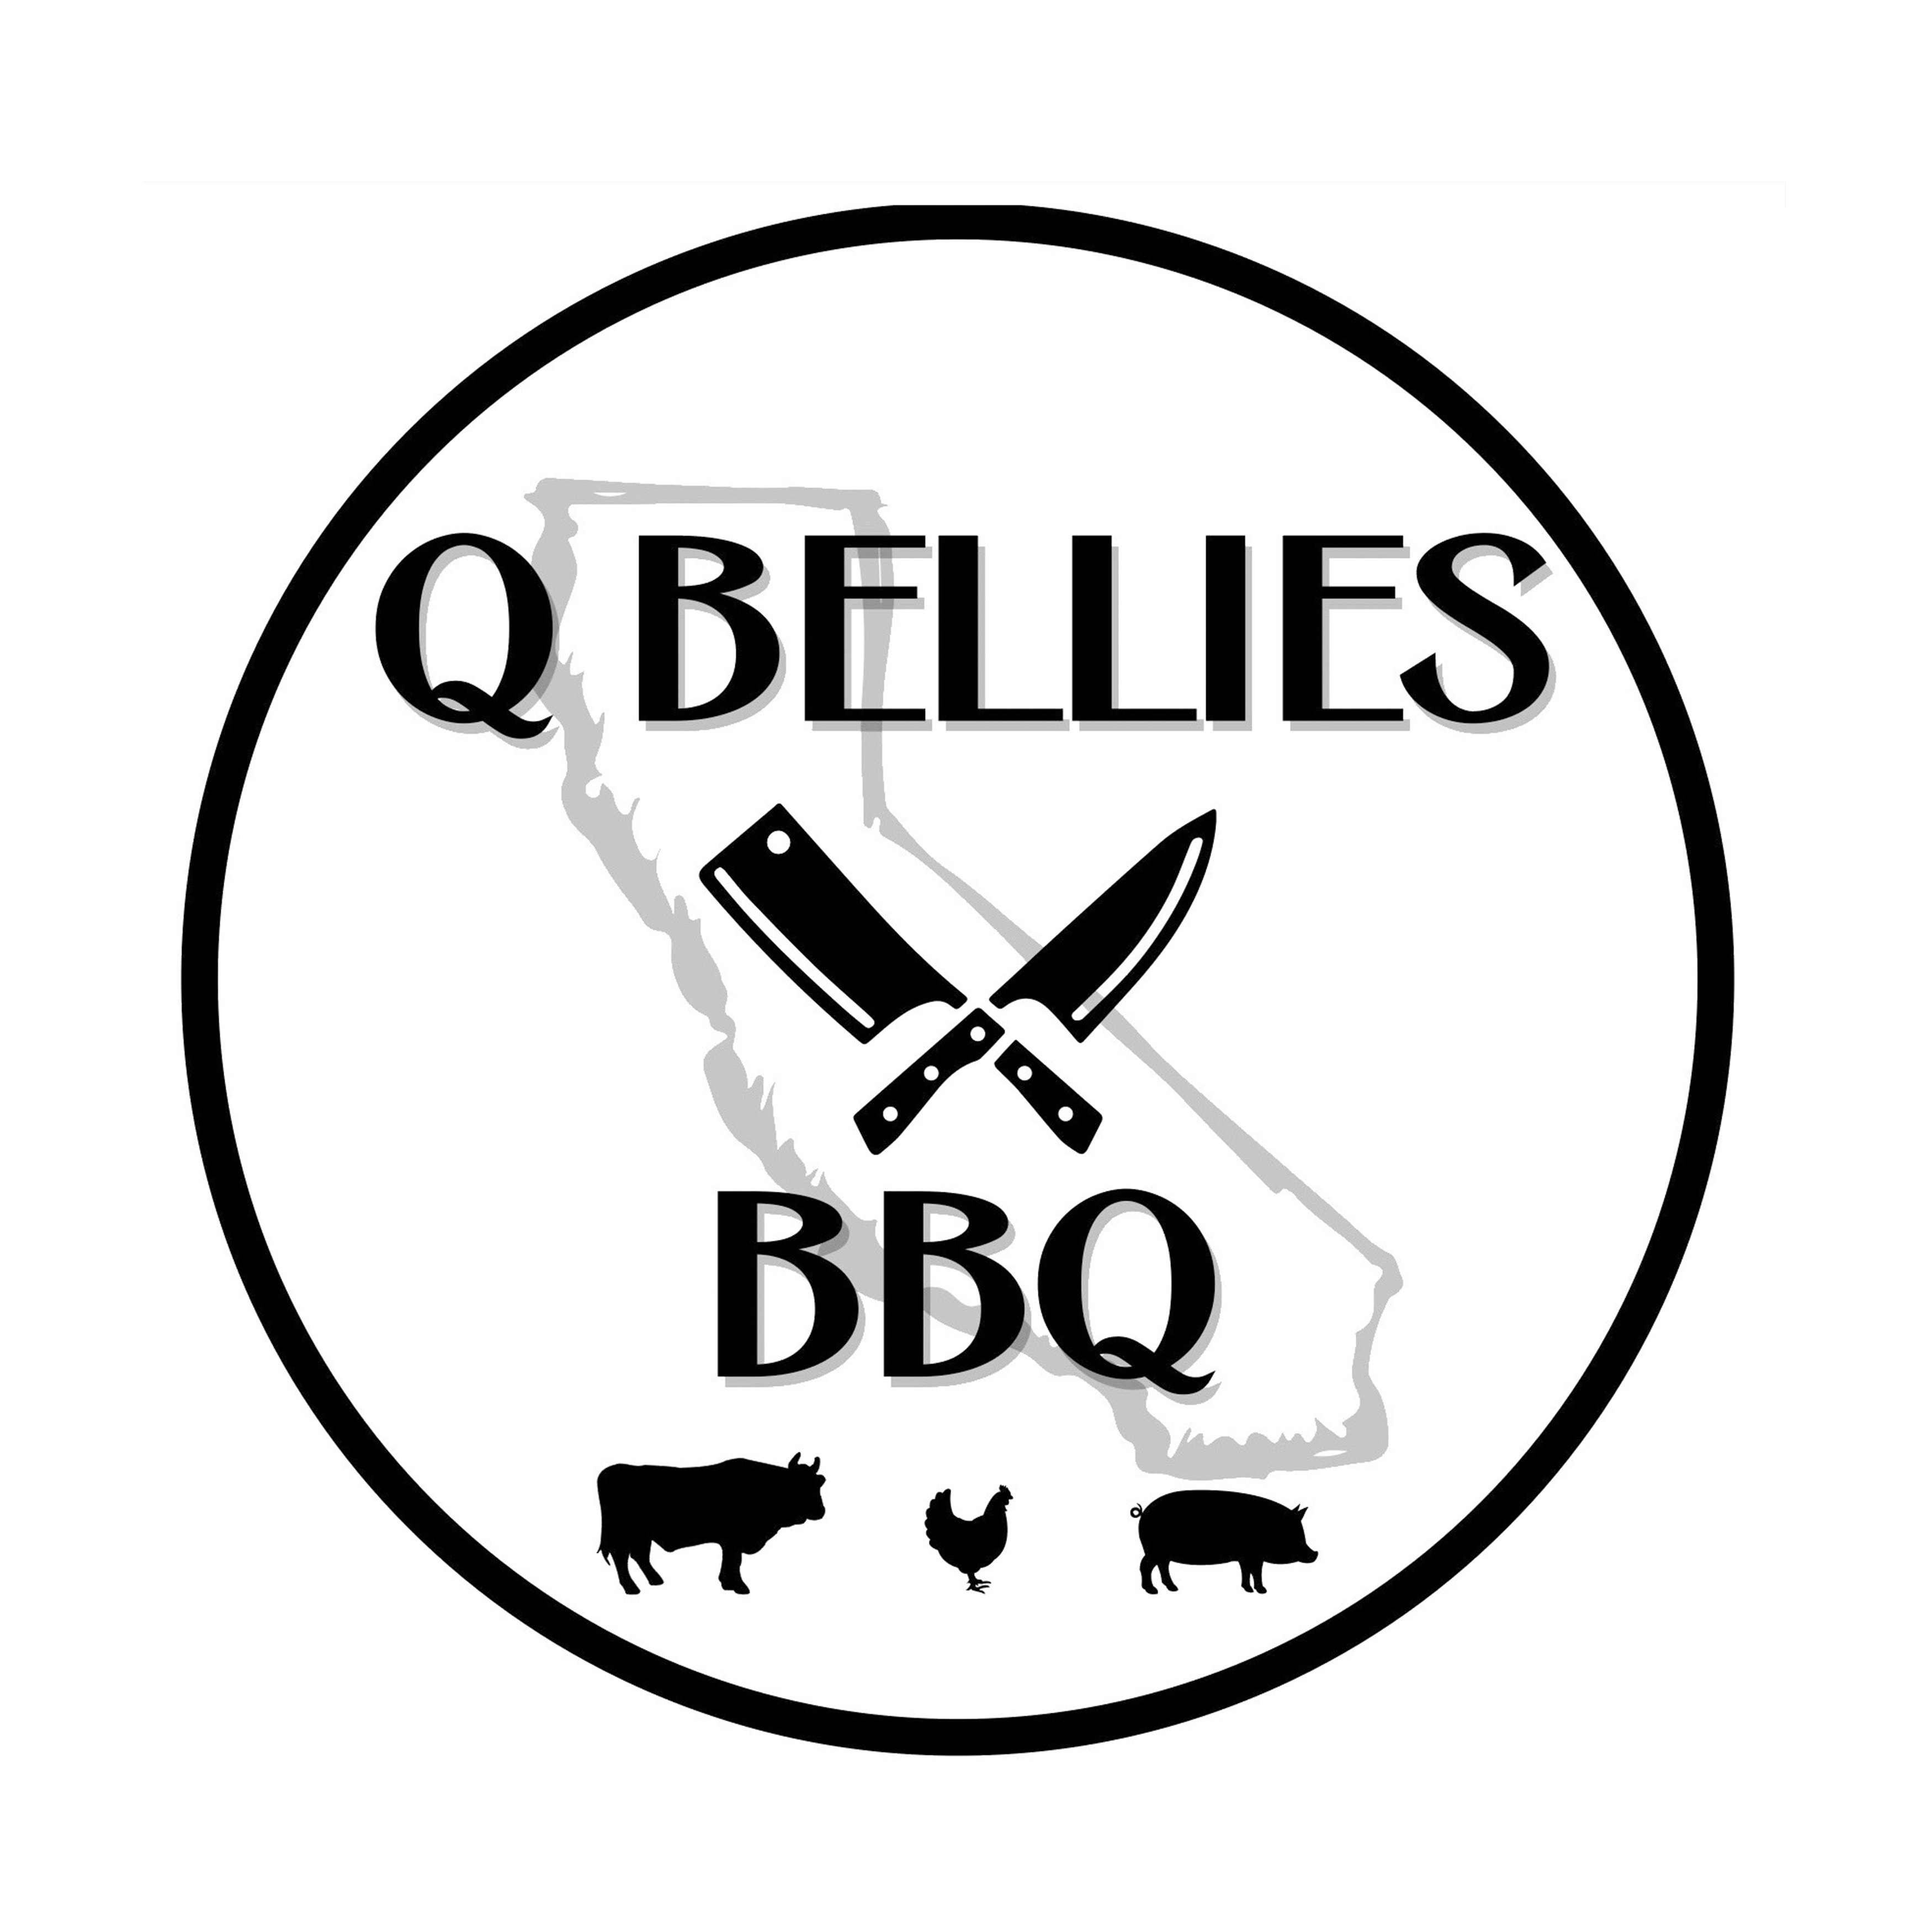 A photo of the Q Bellies BBQ logo 